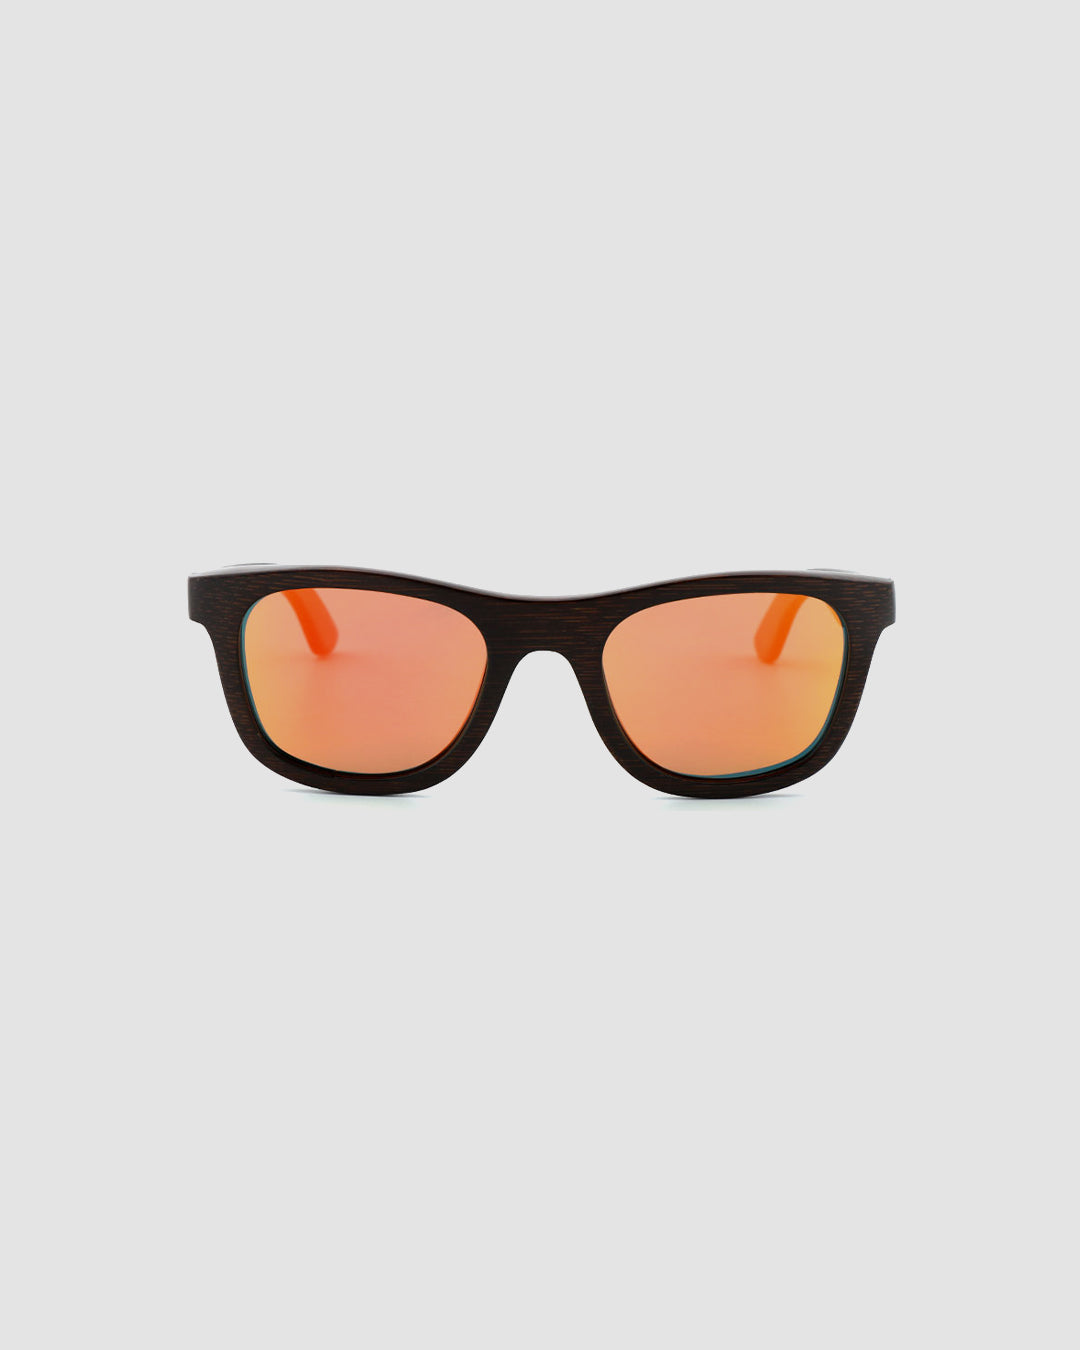 Tawo Sunglasses